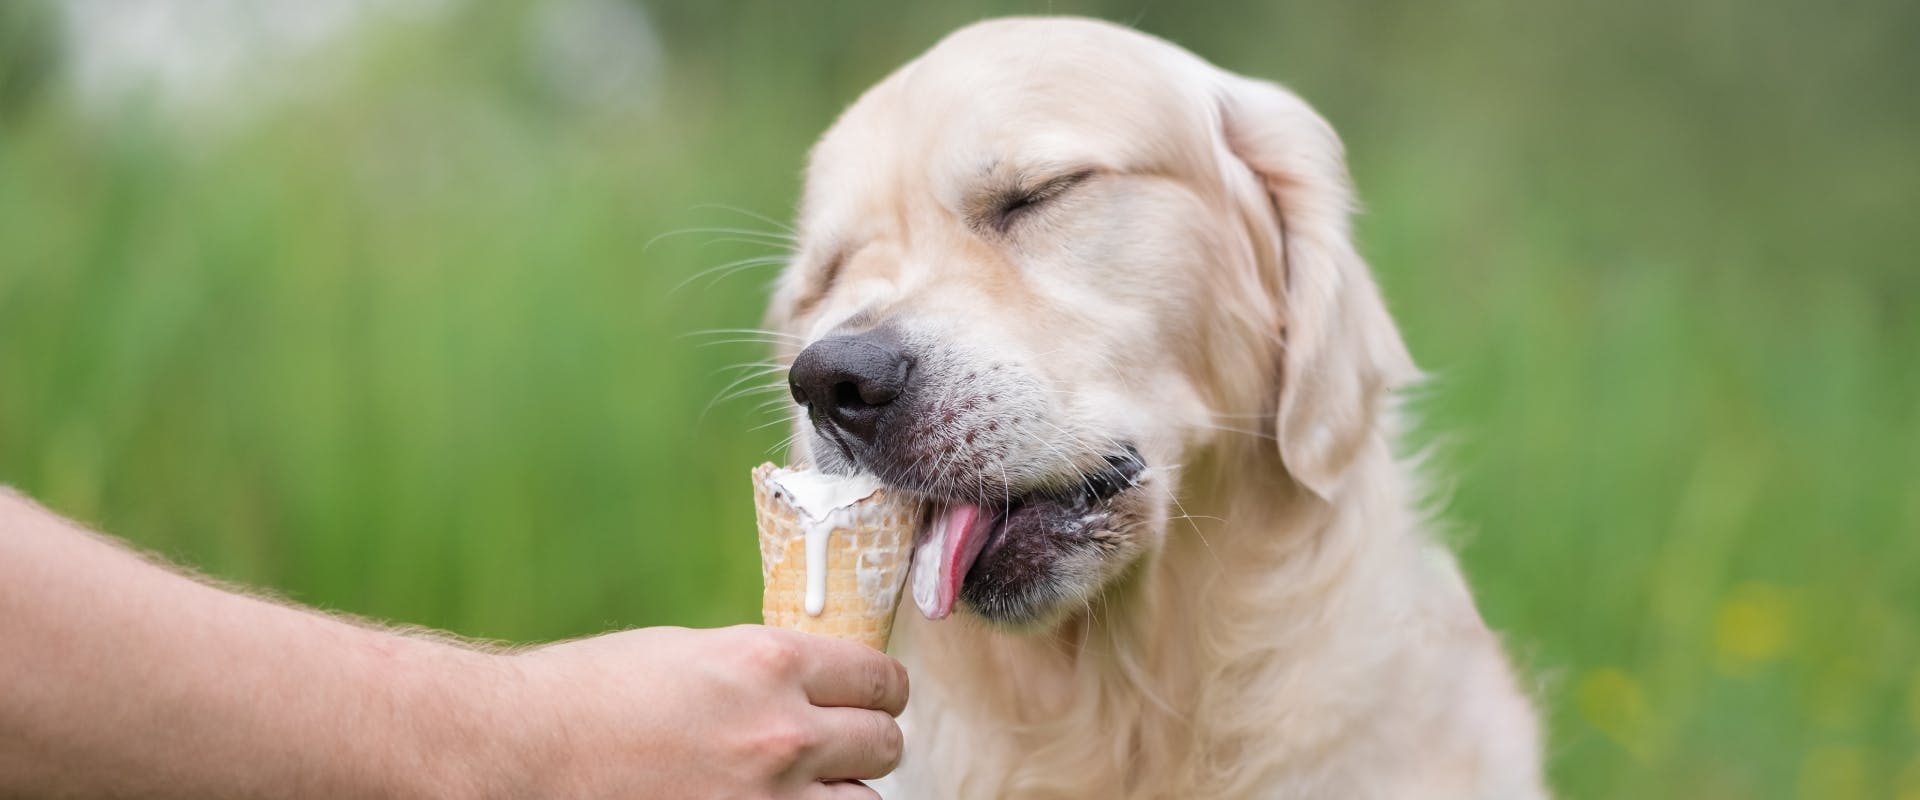 A dog enjoys some dog-friendly ice cream.